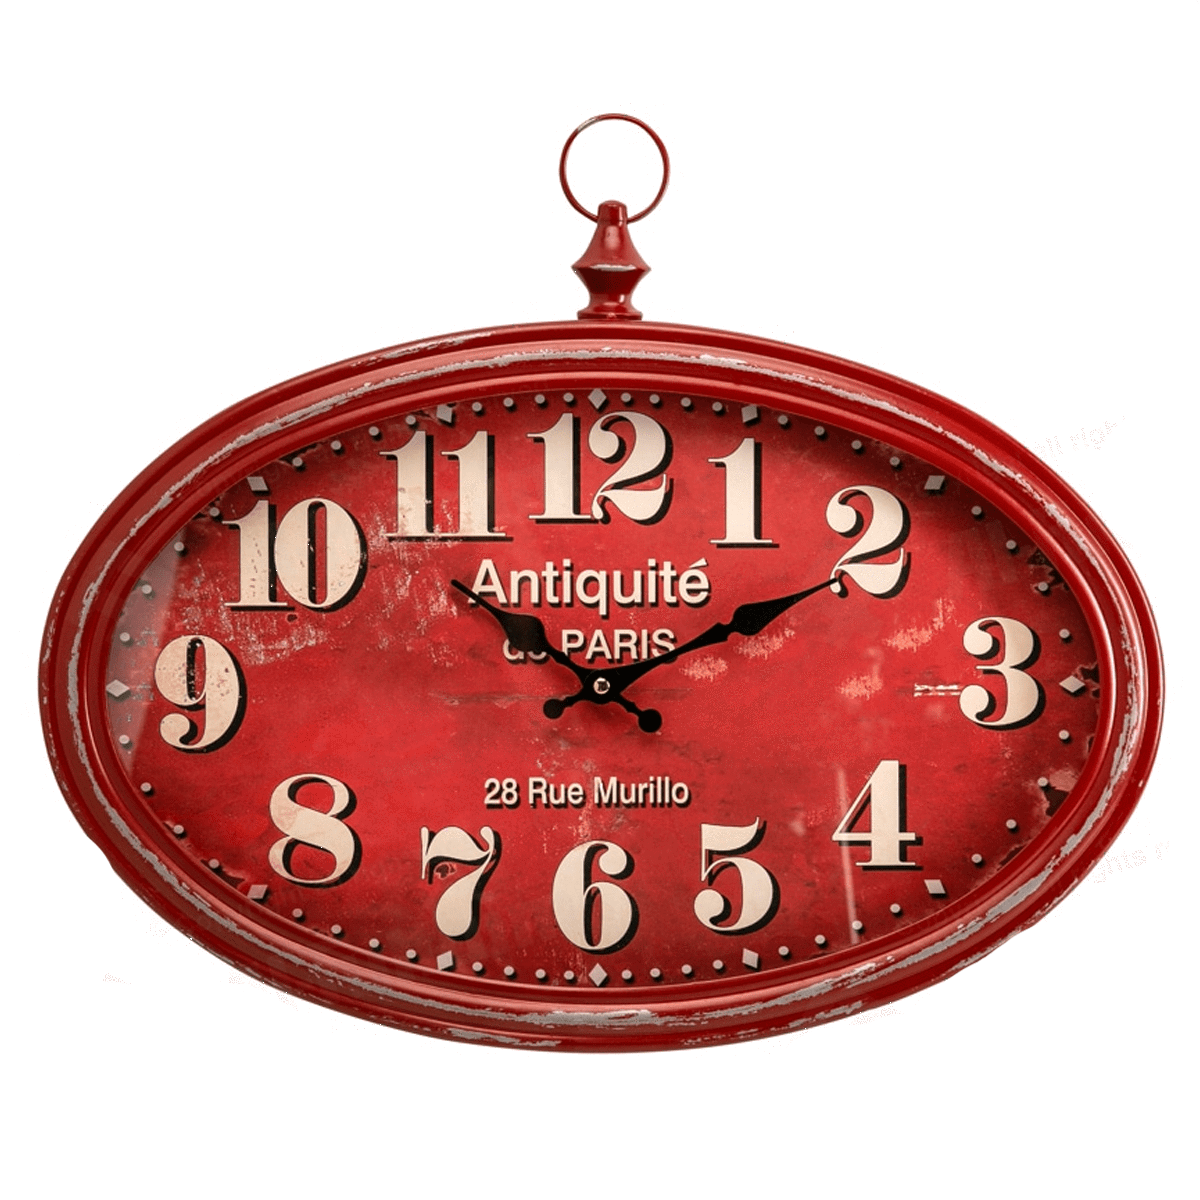 Antiquite de Paris Vintage Analog Wall Clock (Red)